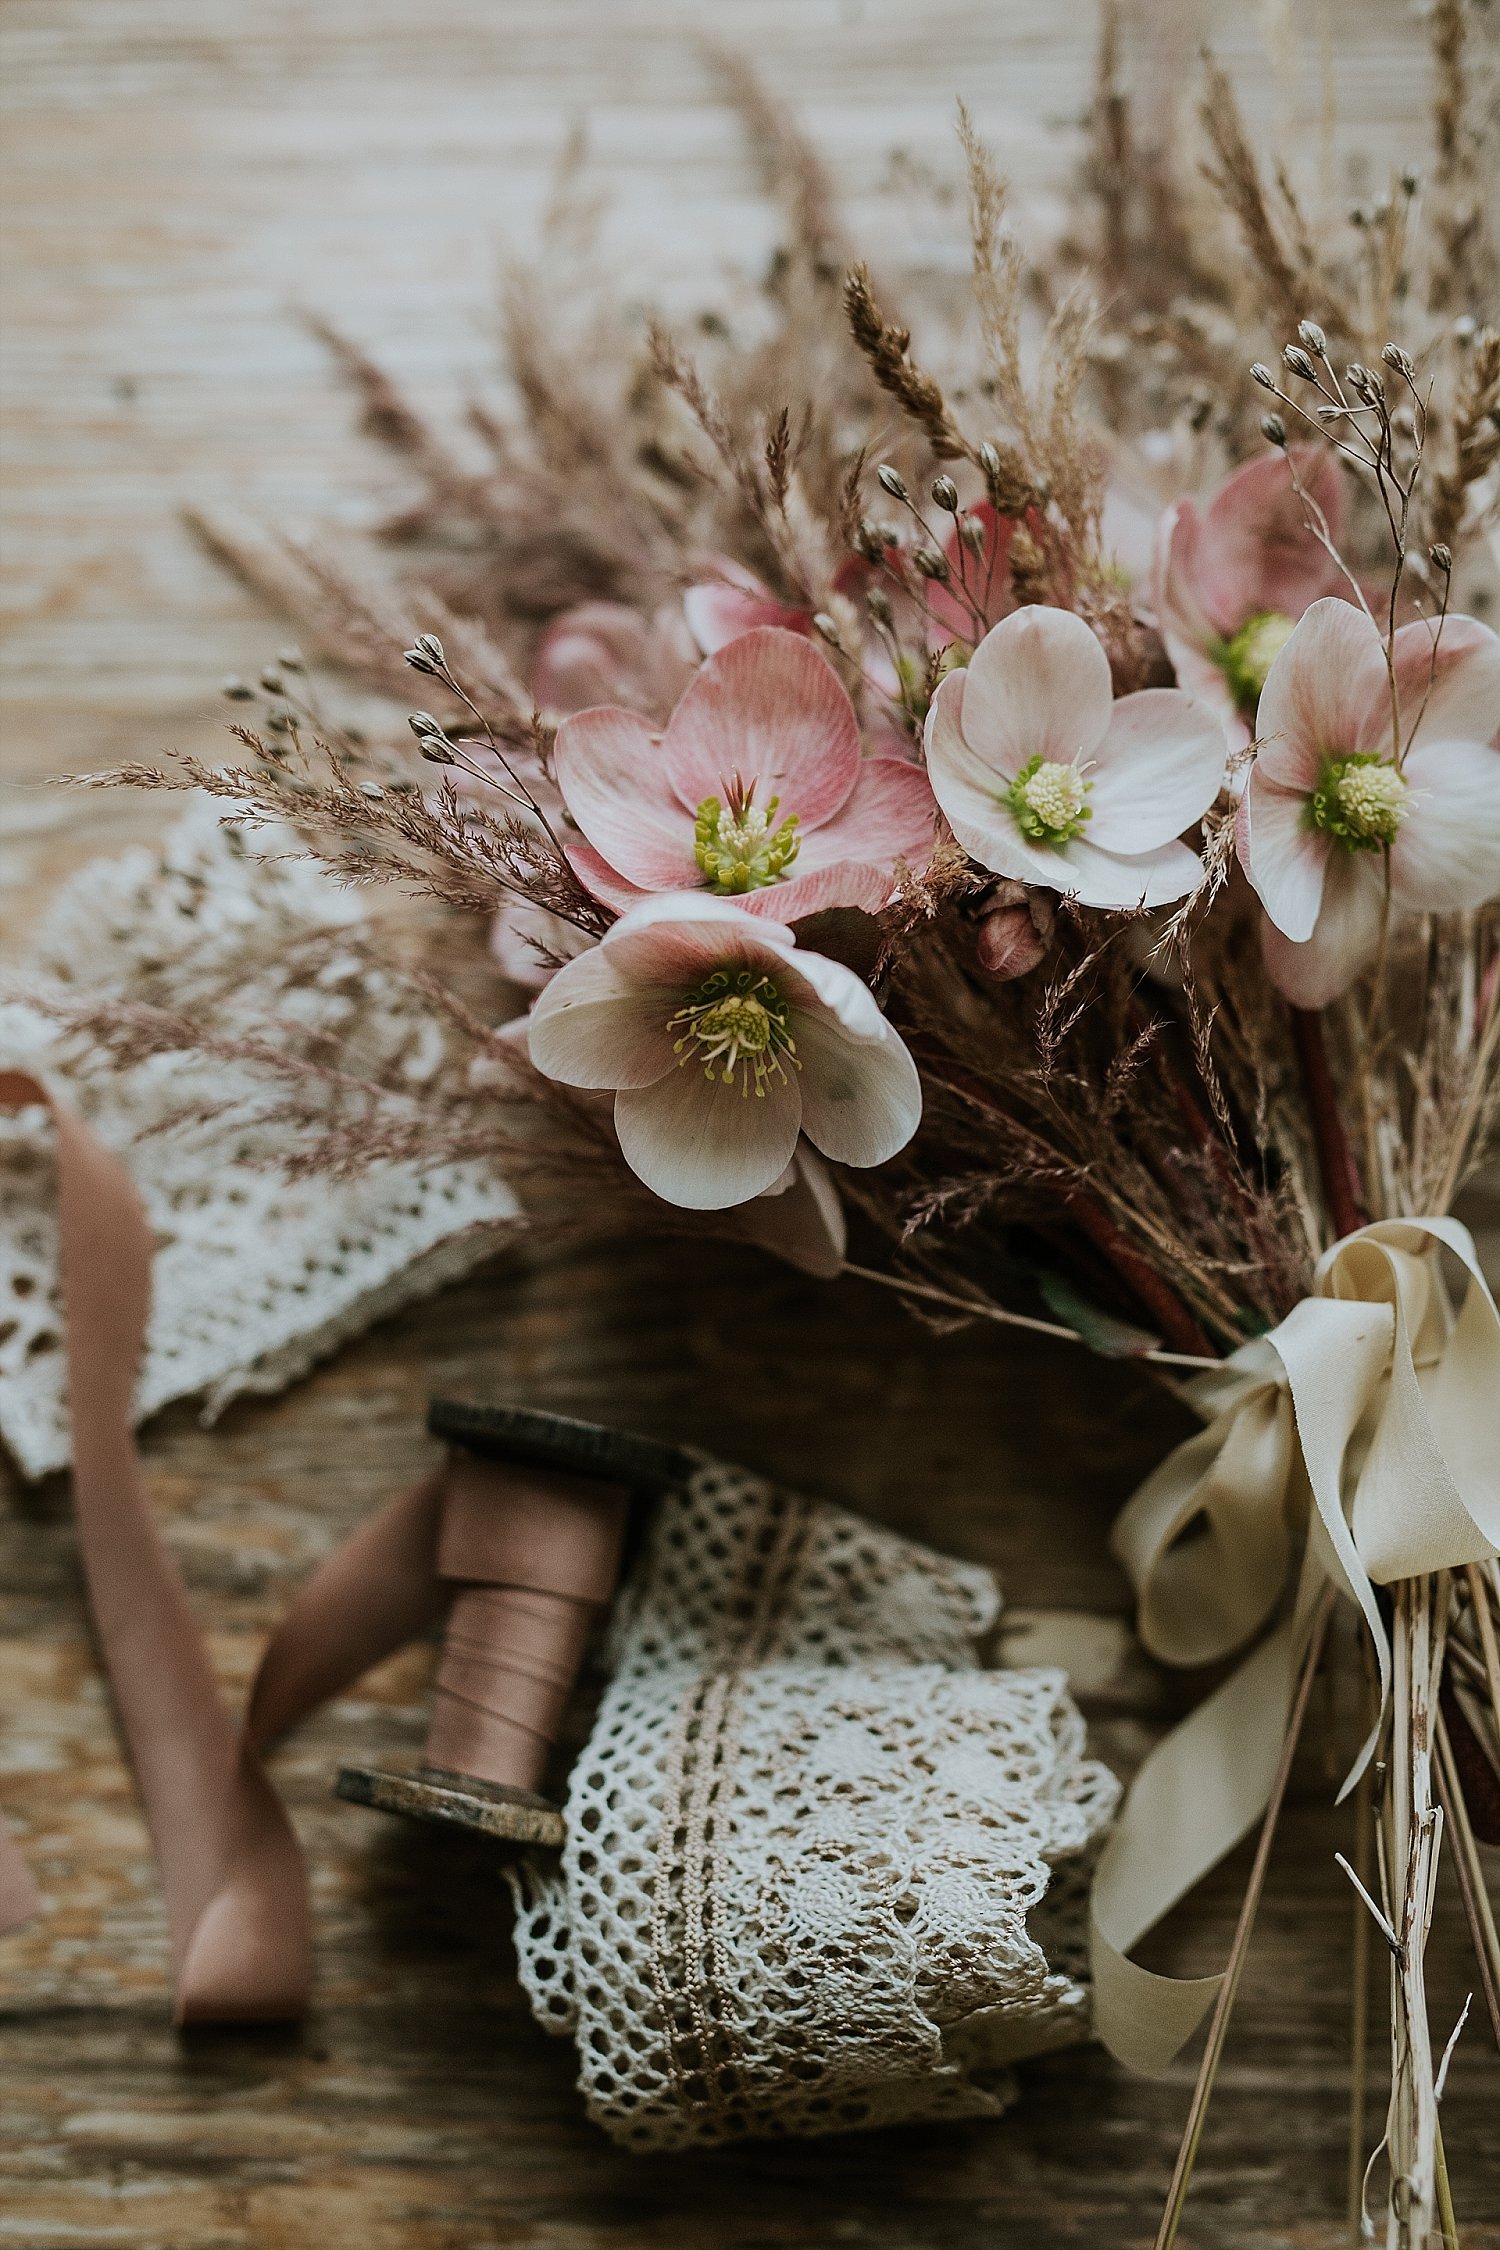 muted tone floral arrangement for winter wedding | winter wedding flowers | destination wedding | get married in Denmark | Aero Island | Danish Island Weddings